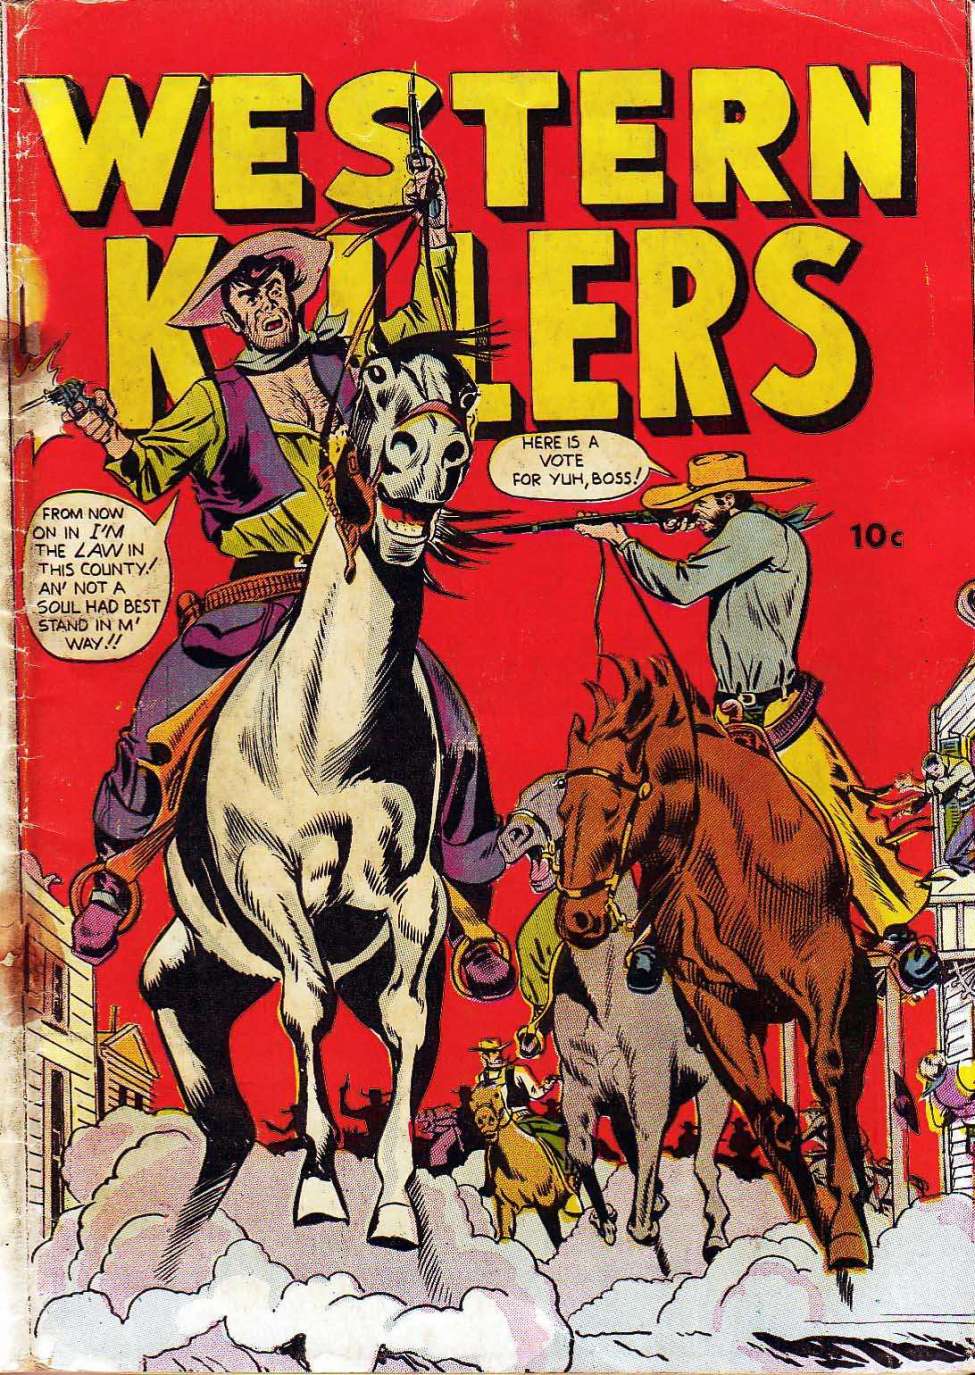 Comic Book Cover For Western Killers (nn)